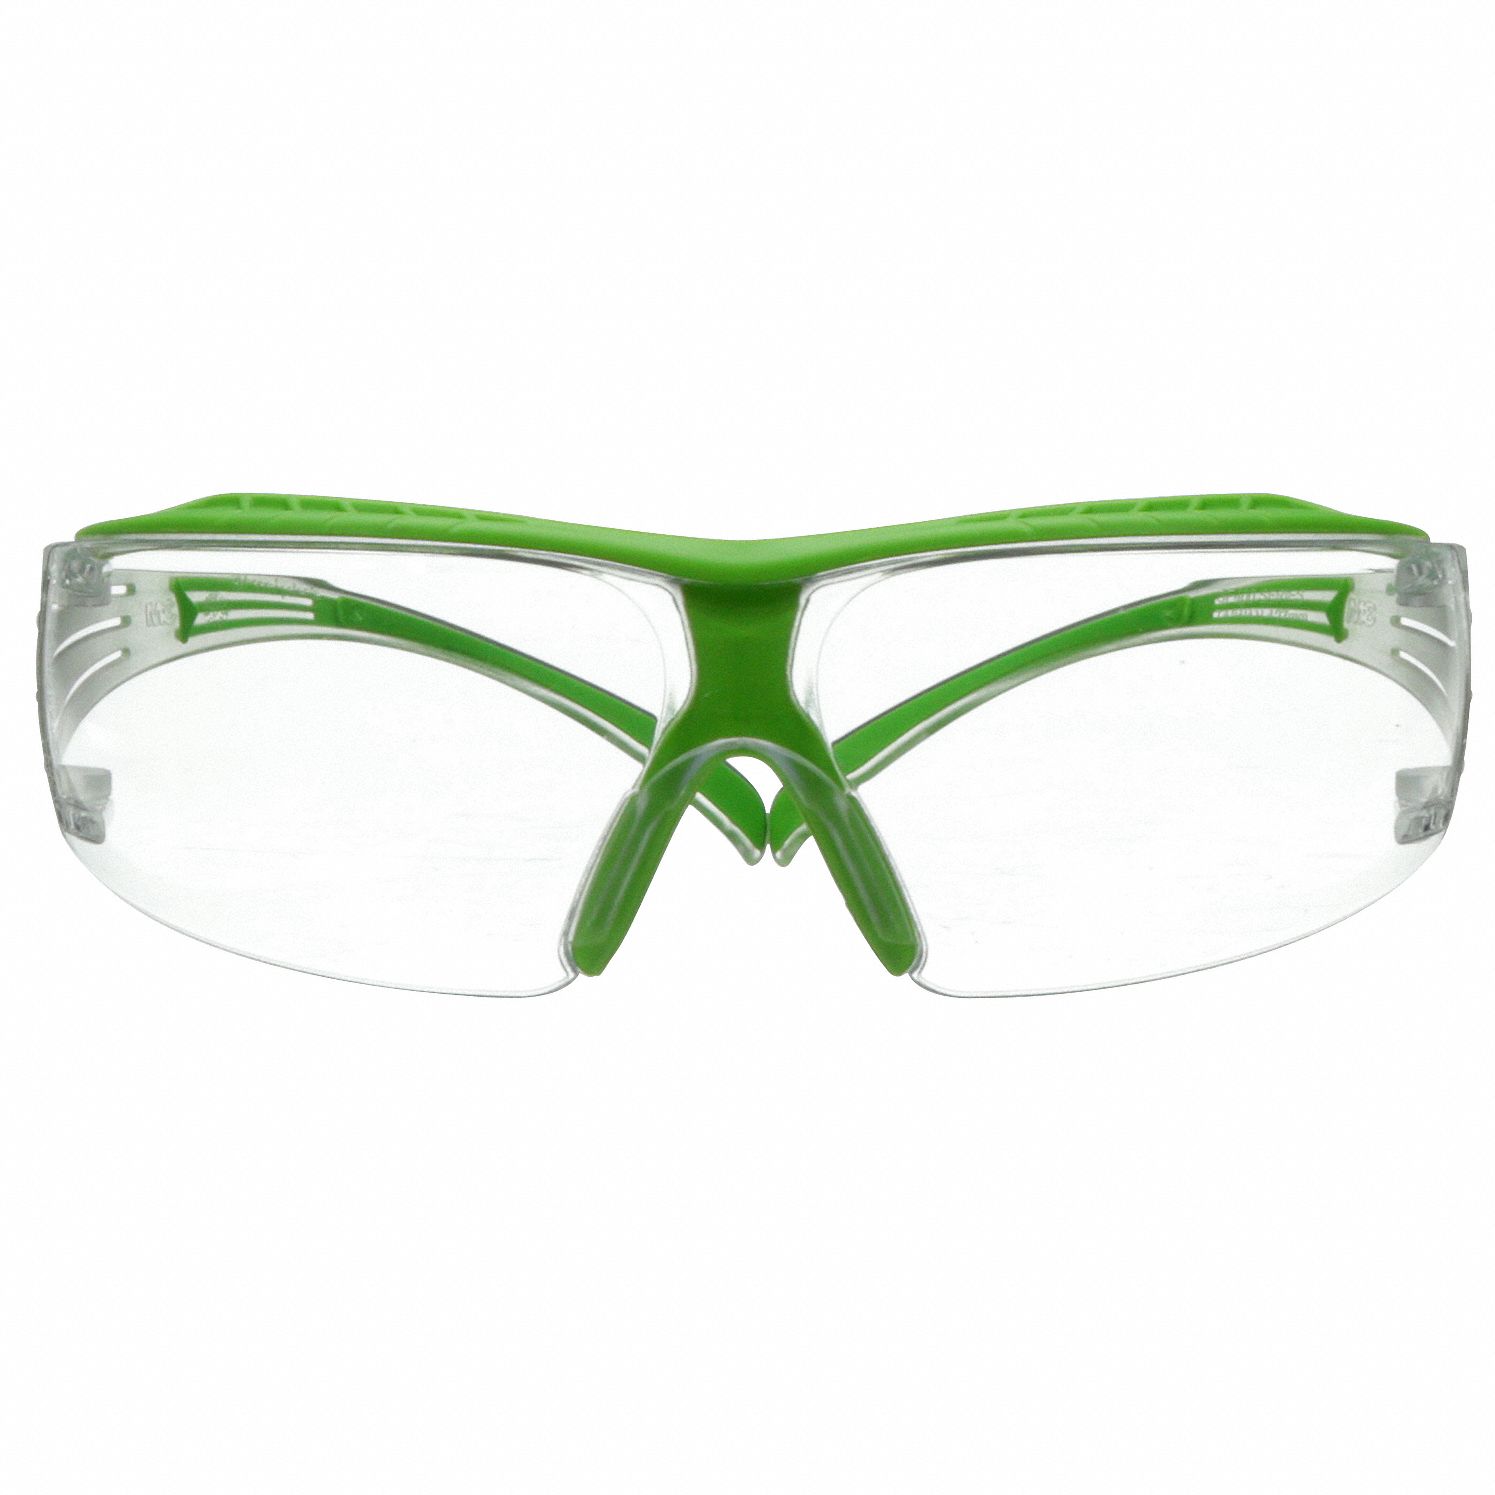 Safety Glasses: Anti-Fog /Anti-Scratch, Brow Foam Lining, Wraparound Frame, Frameless